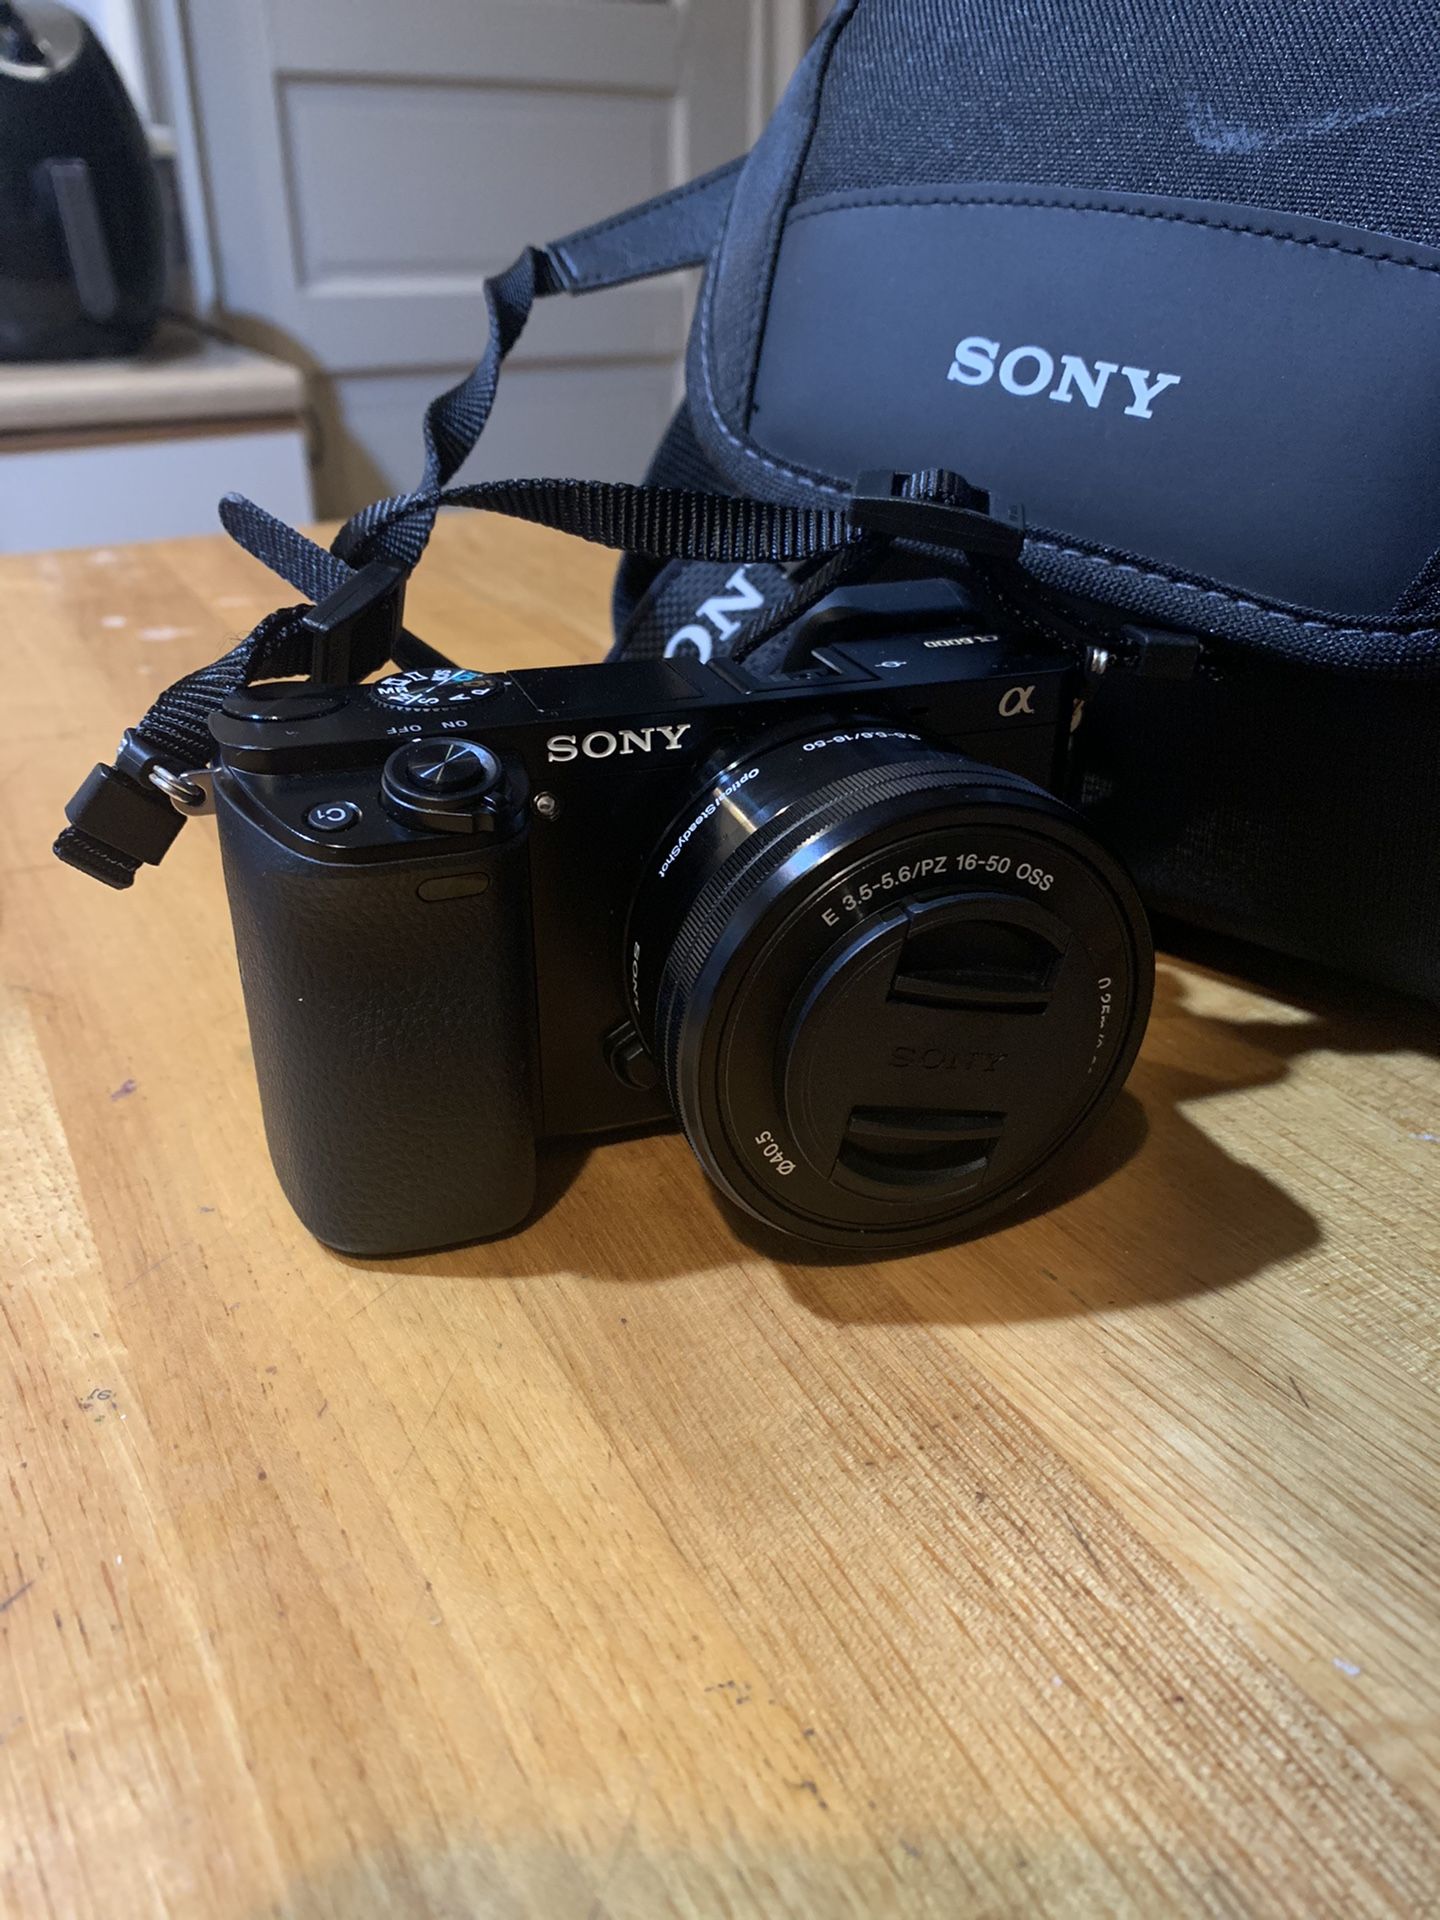 Sony Alpha A6000 Digital Camera - Black with 16-50mm Power Zoom Lens